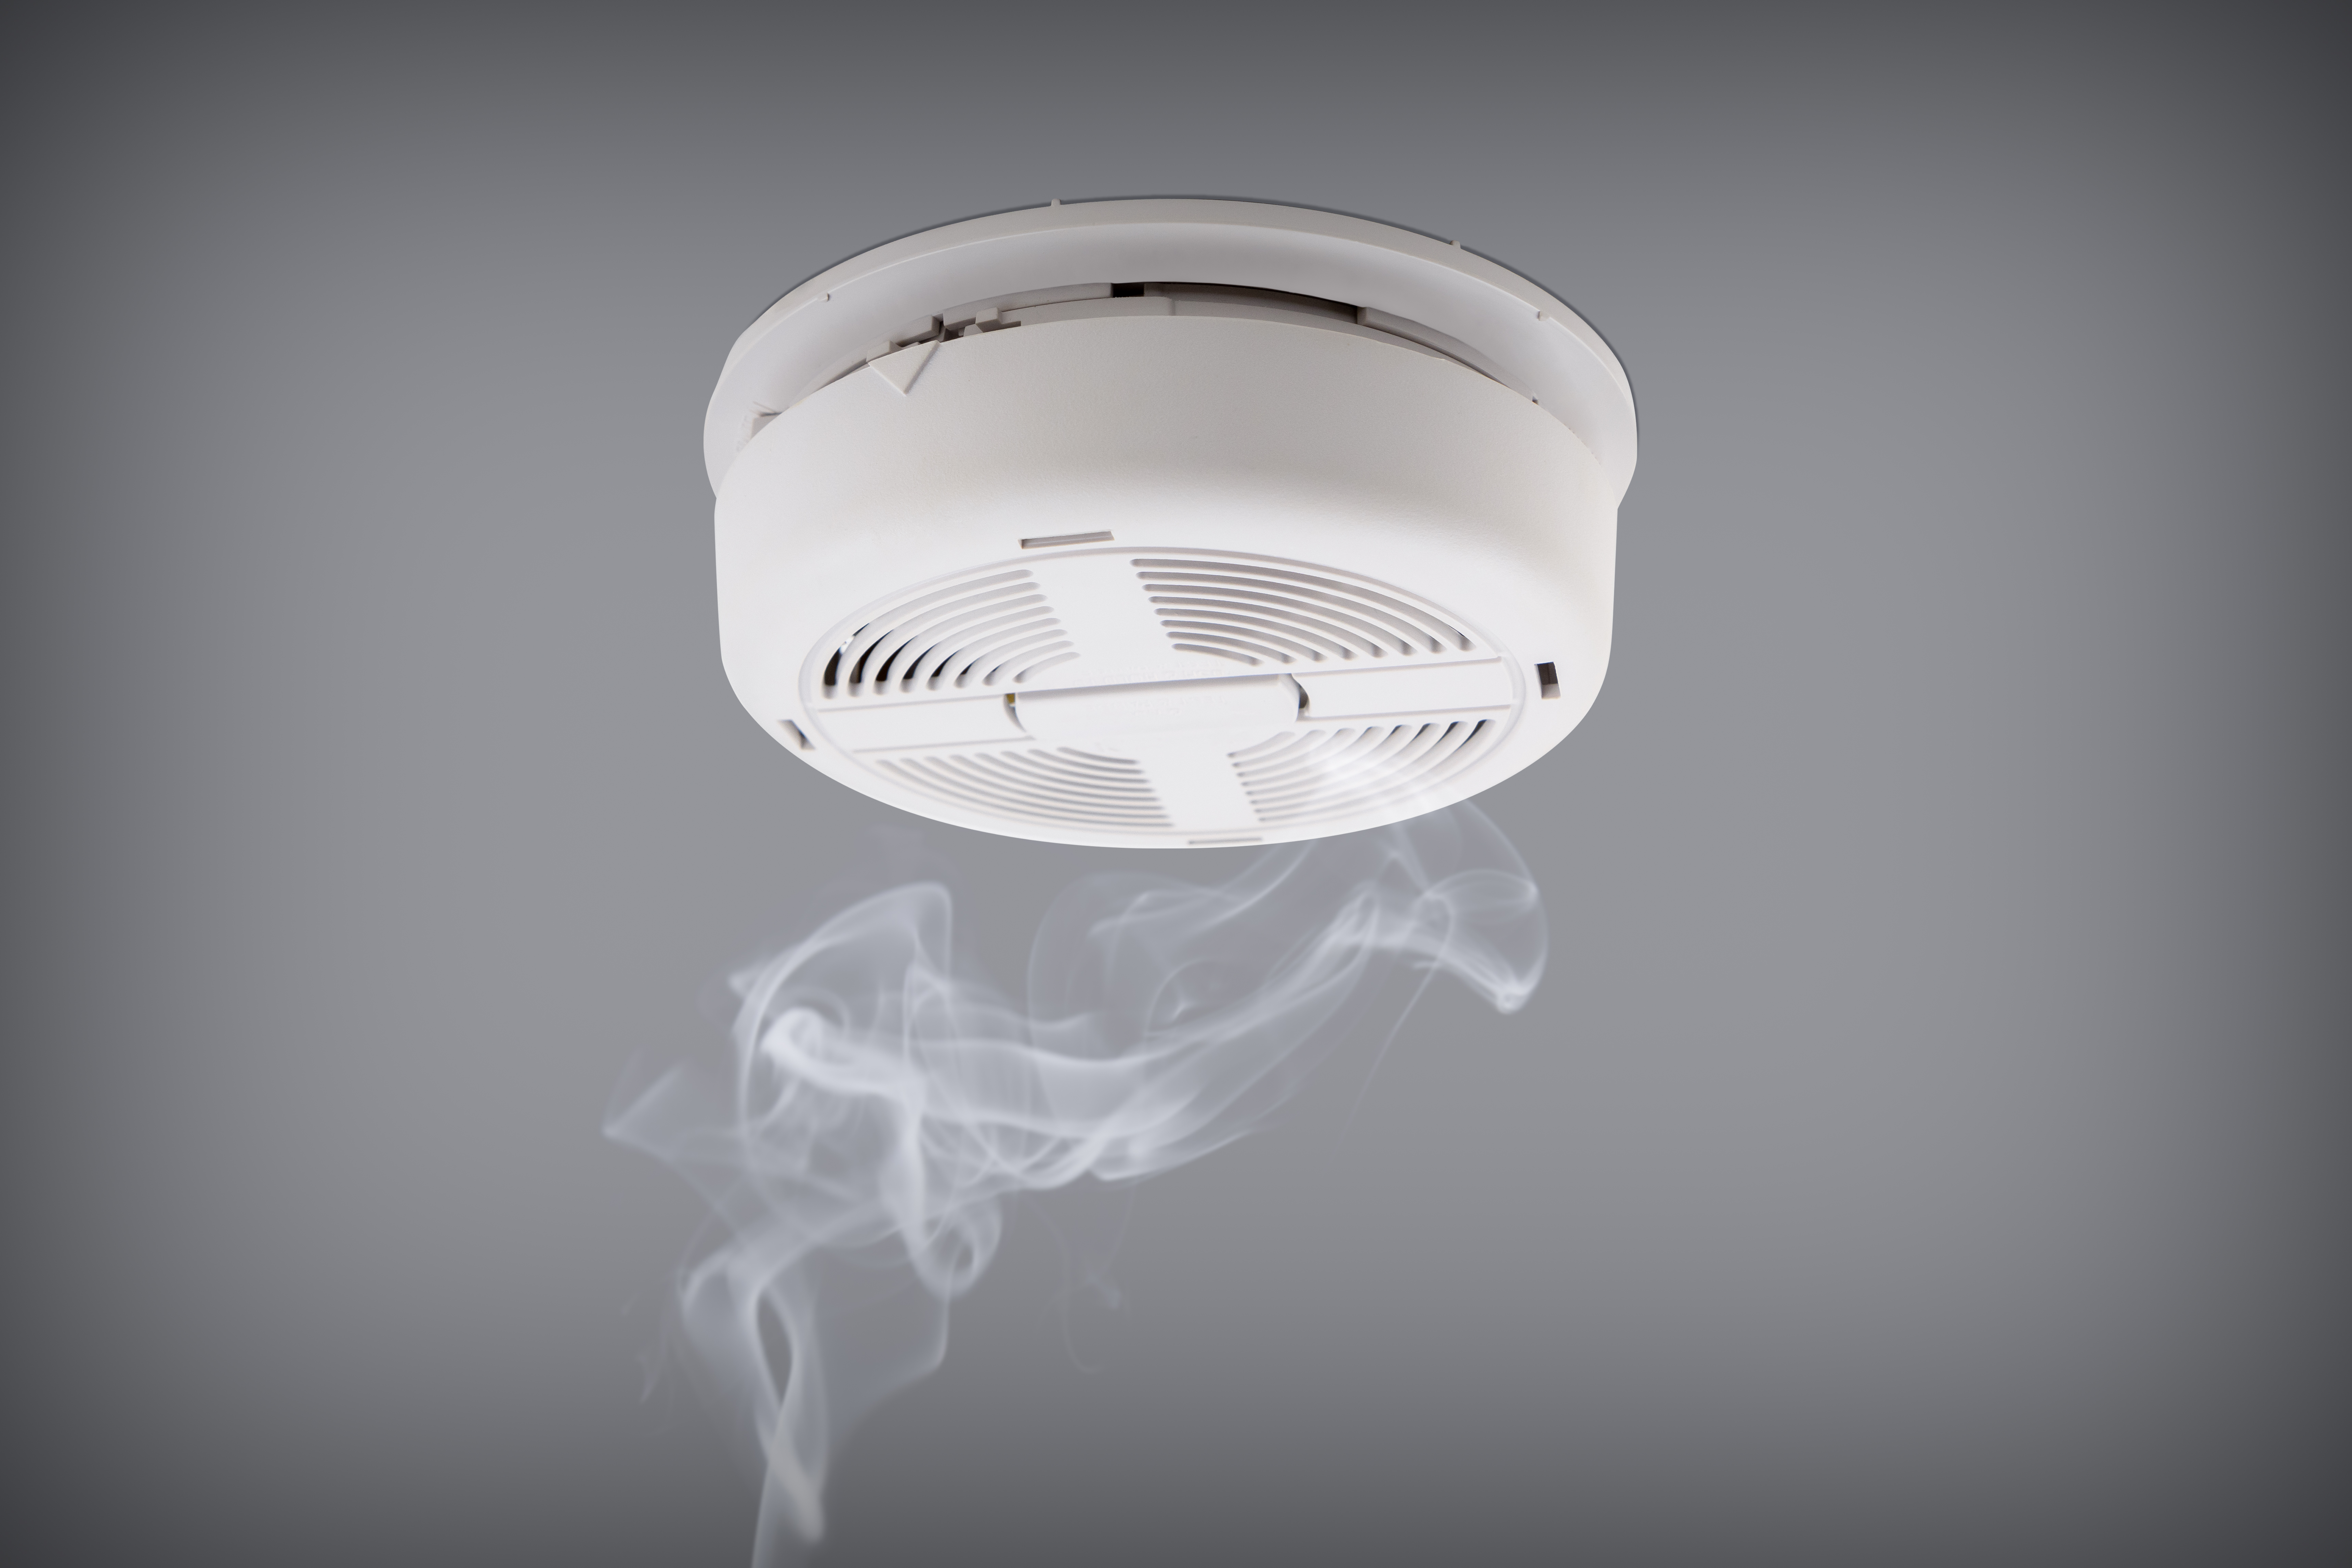 Smoke Detector vs. Heat Detector